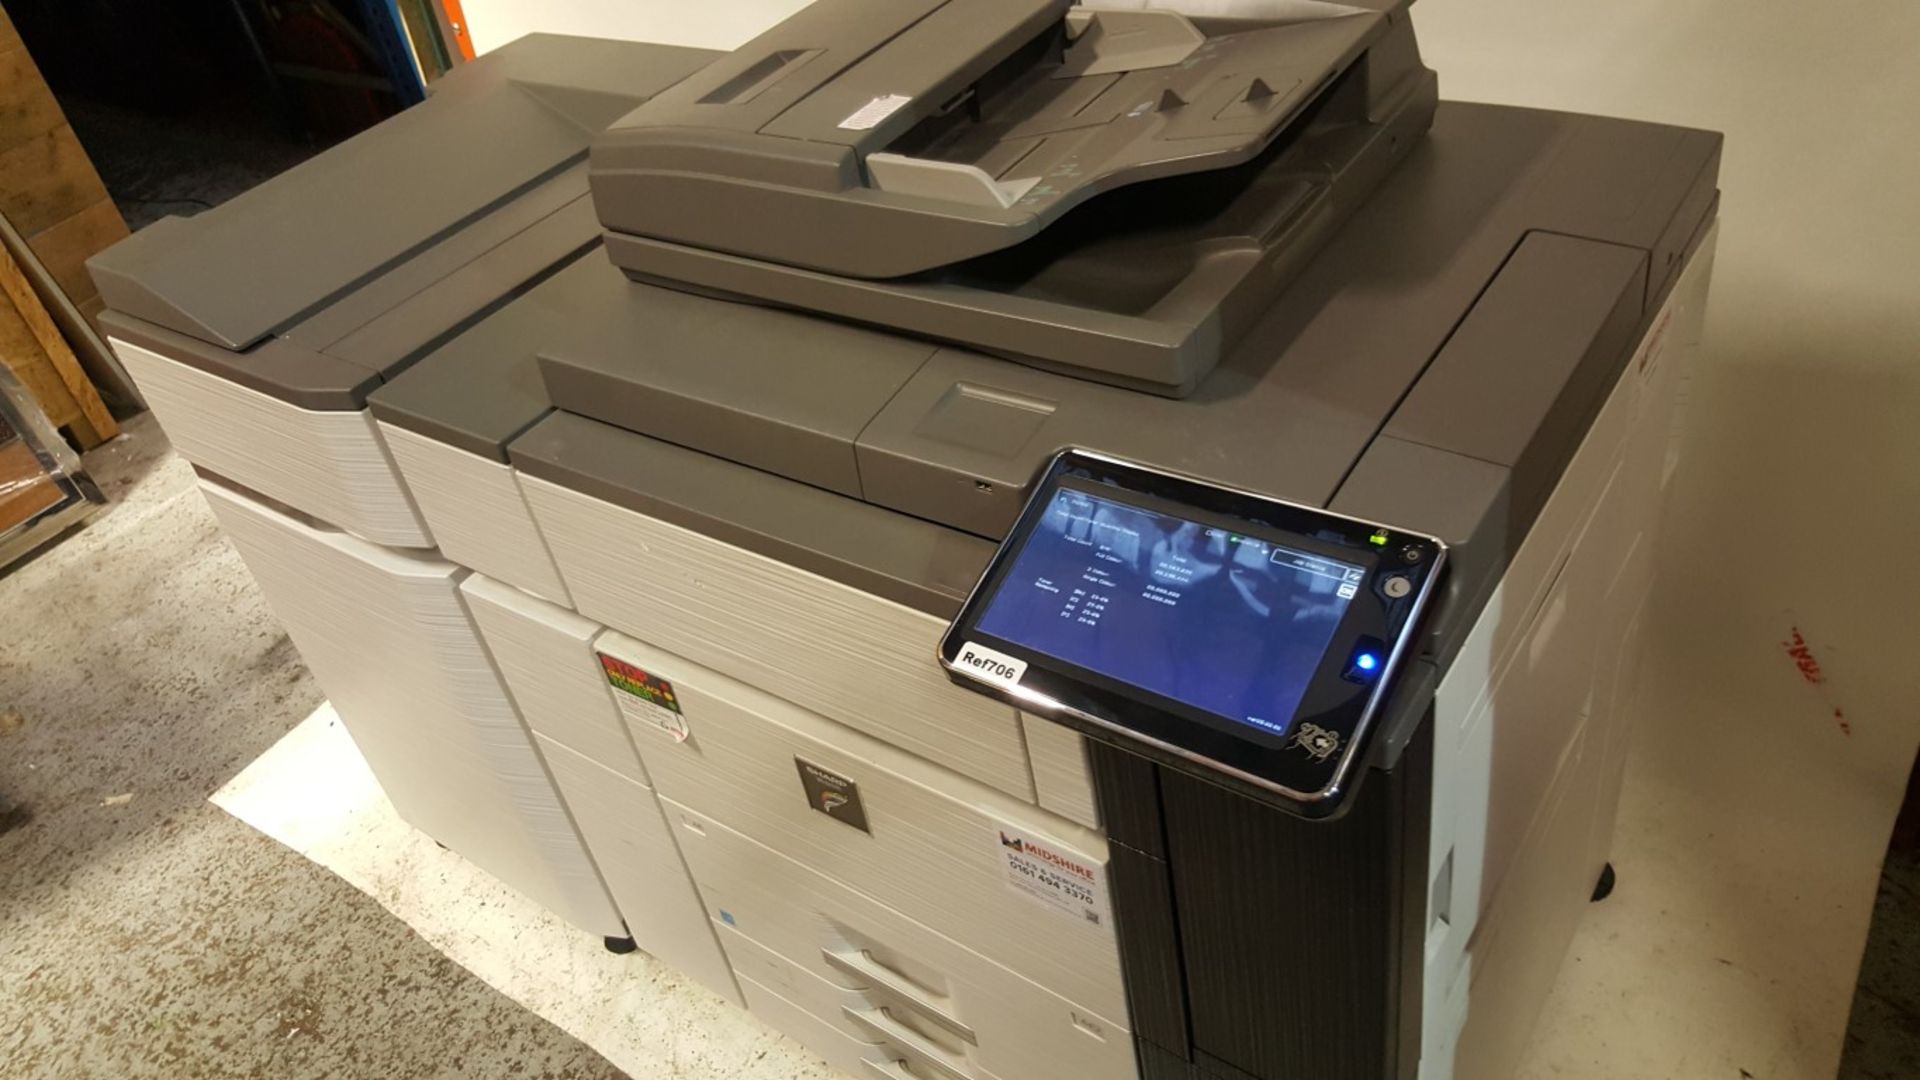 1 x Sharp MX6240N Office Photocopier Printer With Saddle Stitch Finisher & Curl Correction Unit - - Image 3 of 9